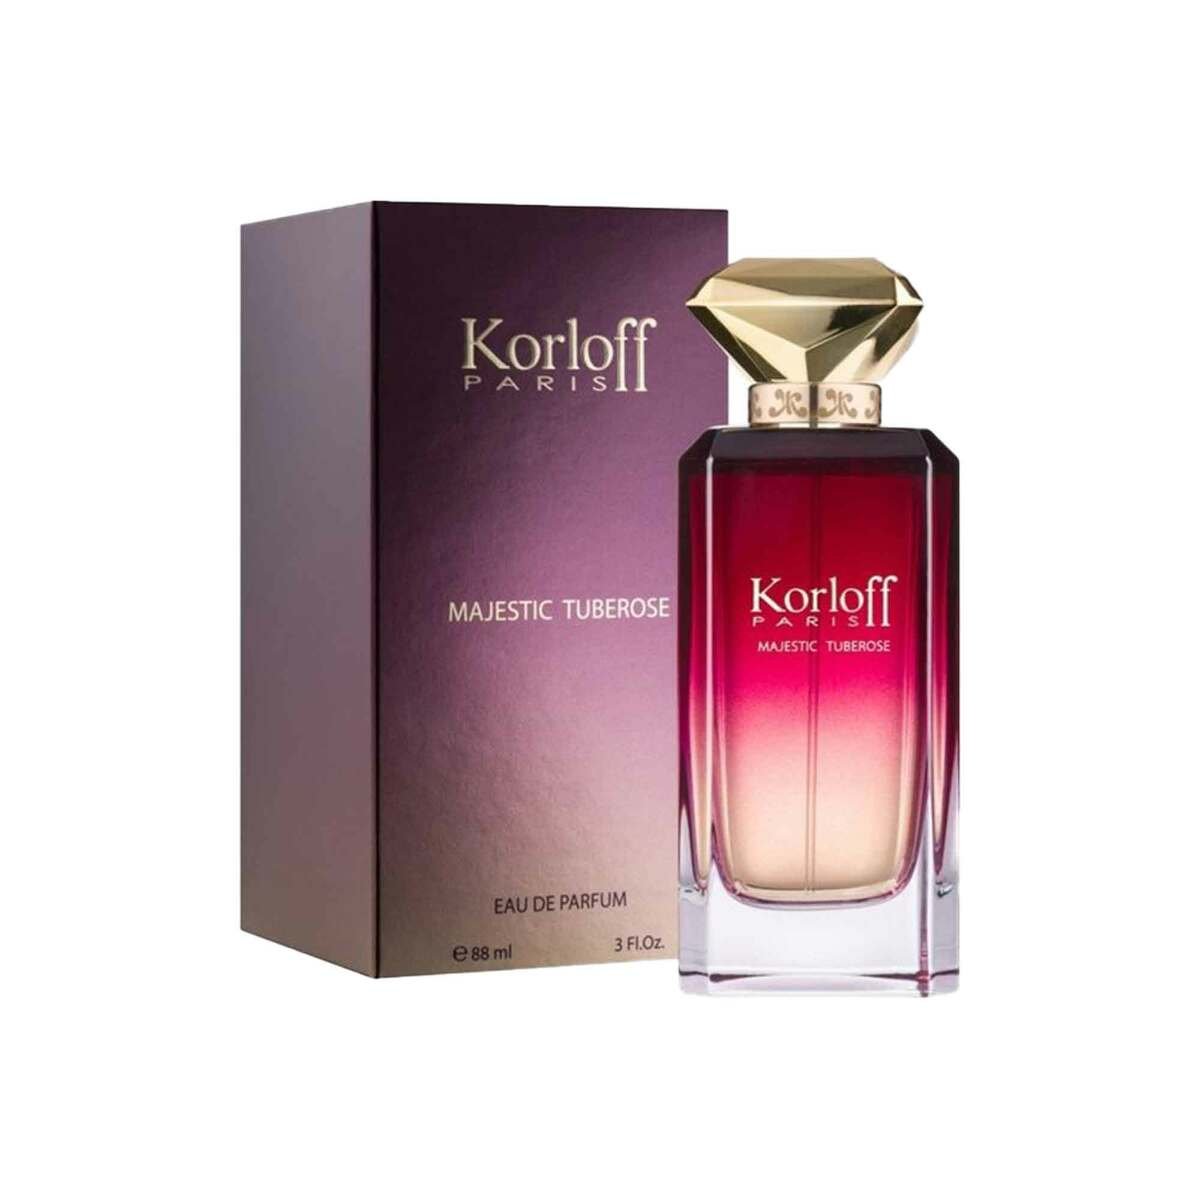 Korloff Paris Majestic Tuberose Eau de Parfum For Women 88ml